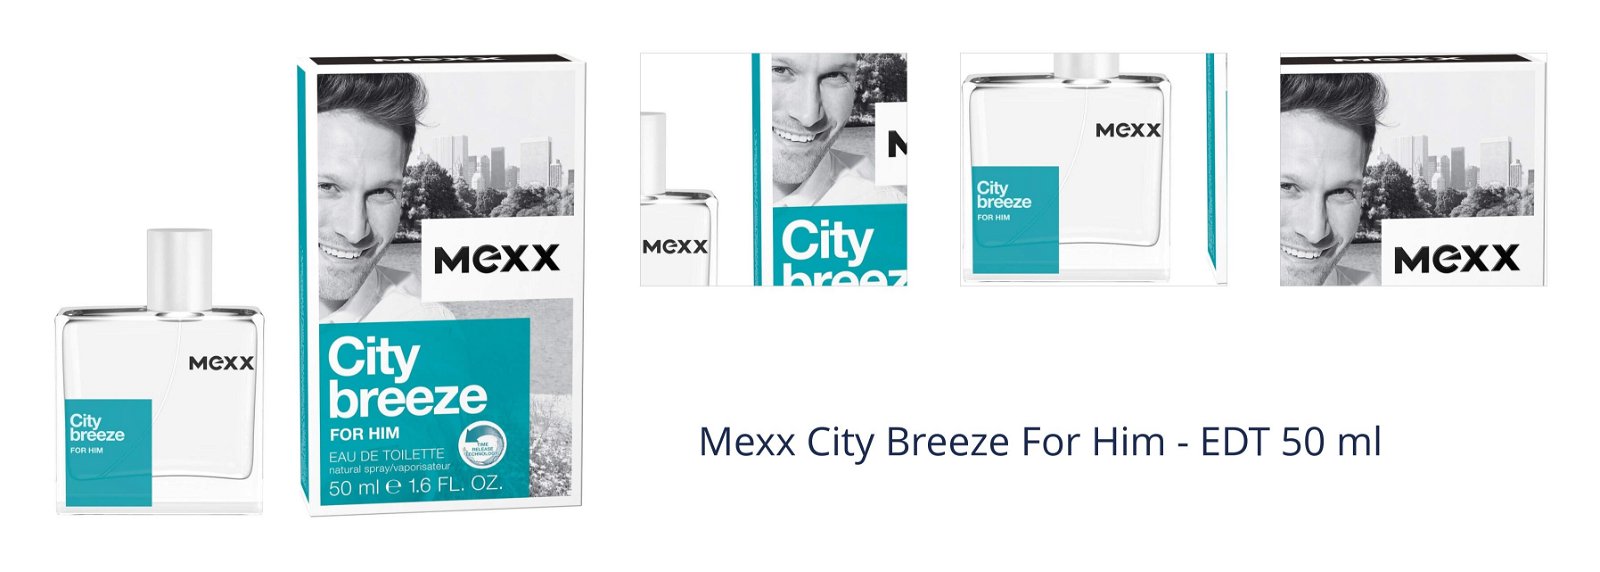 Mexx City Breeze For Him - EDT 50 ml 1